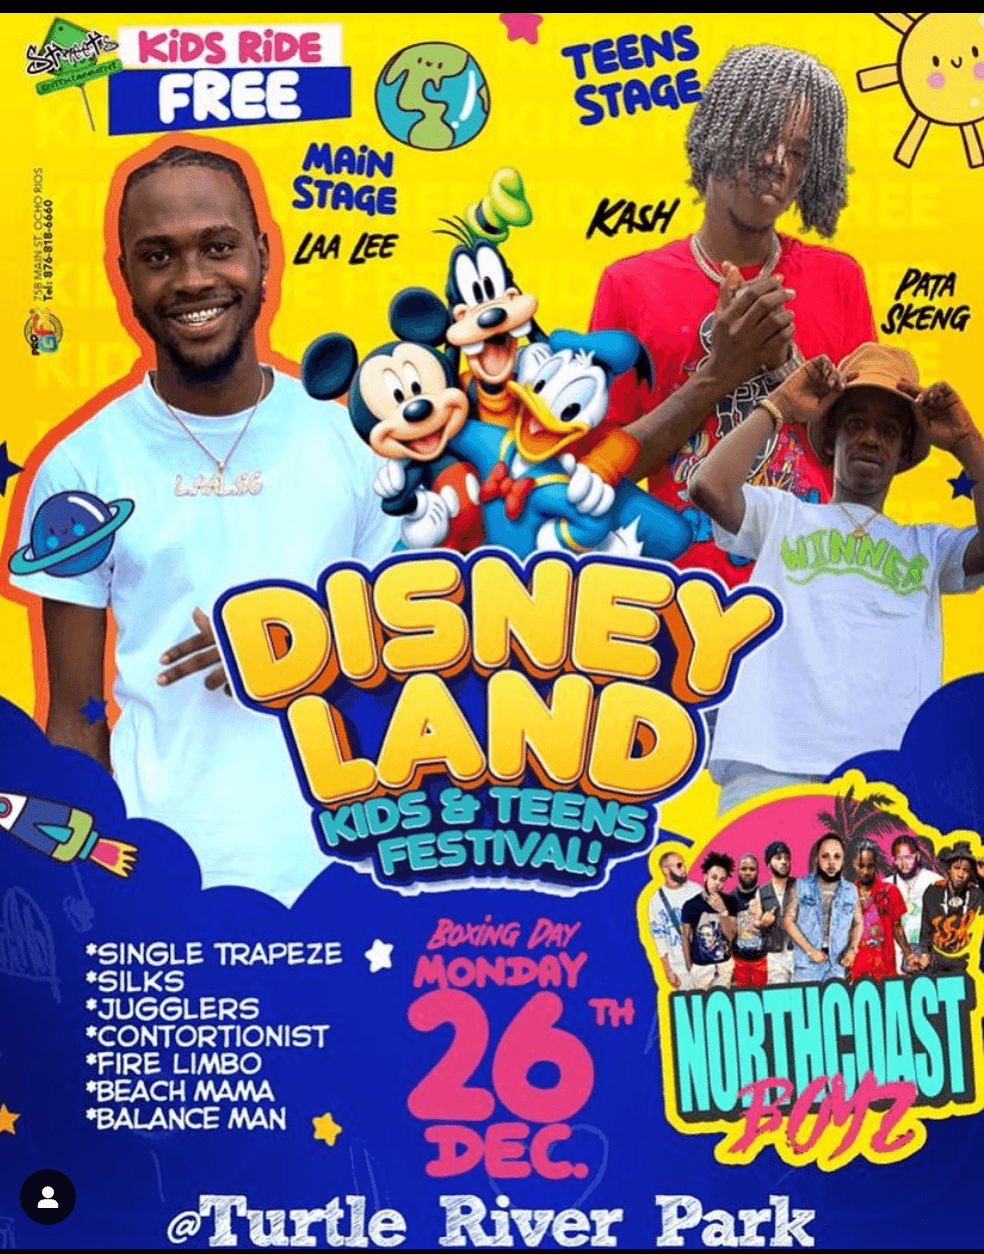 Disney Land Kids & Teens Festival